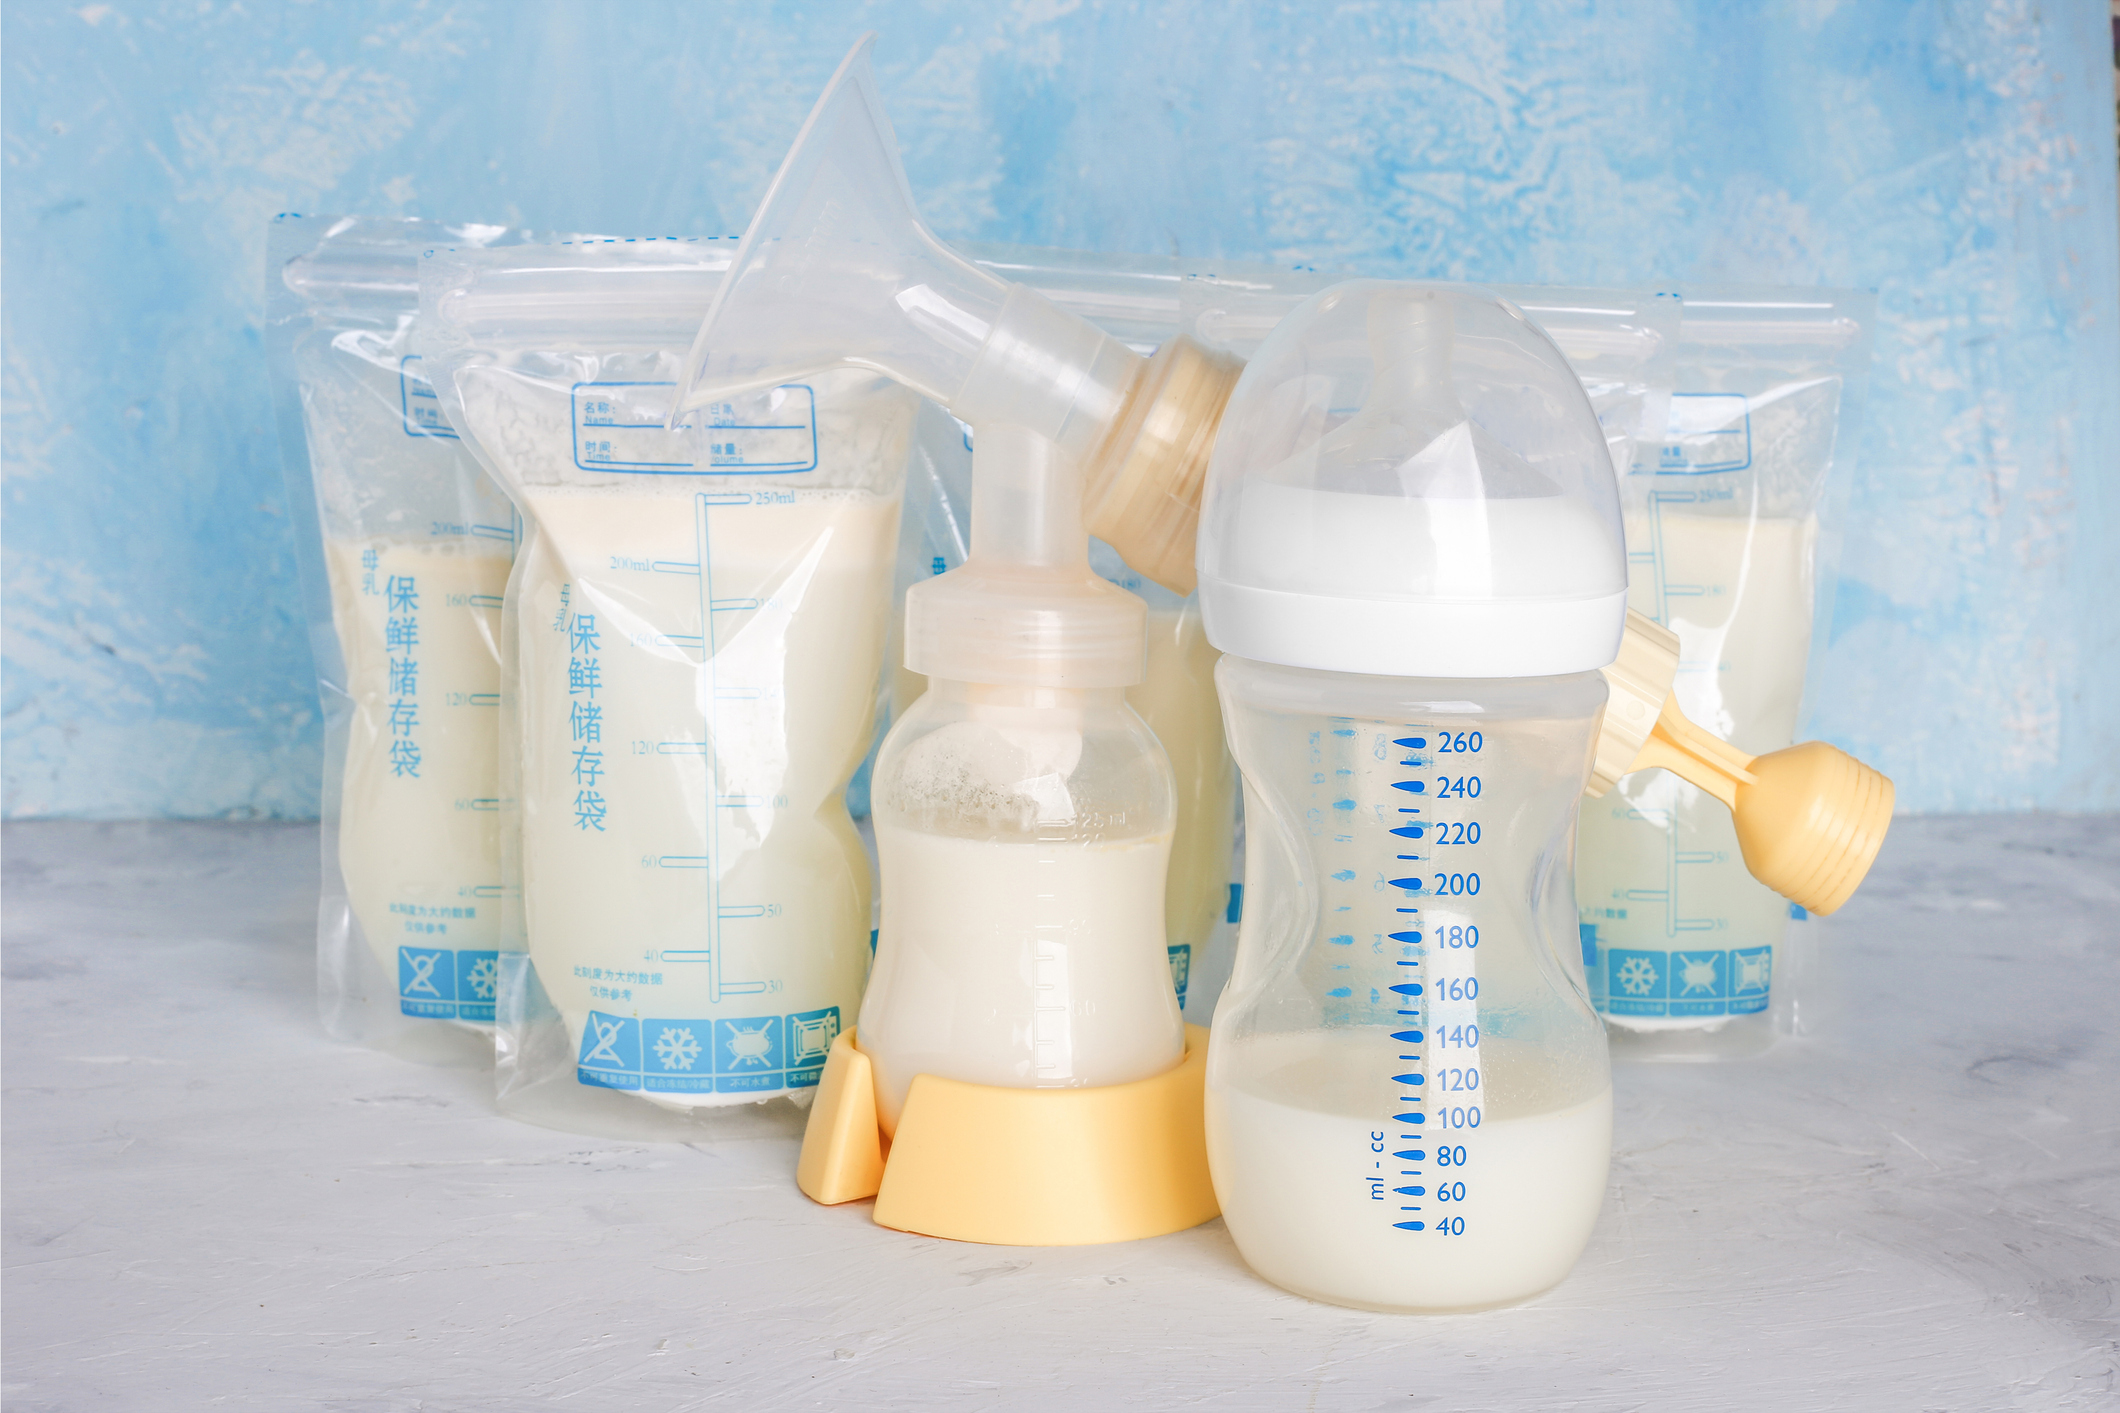 Bags of breastmilk with baby bottles